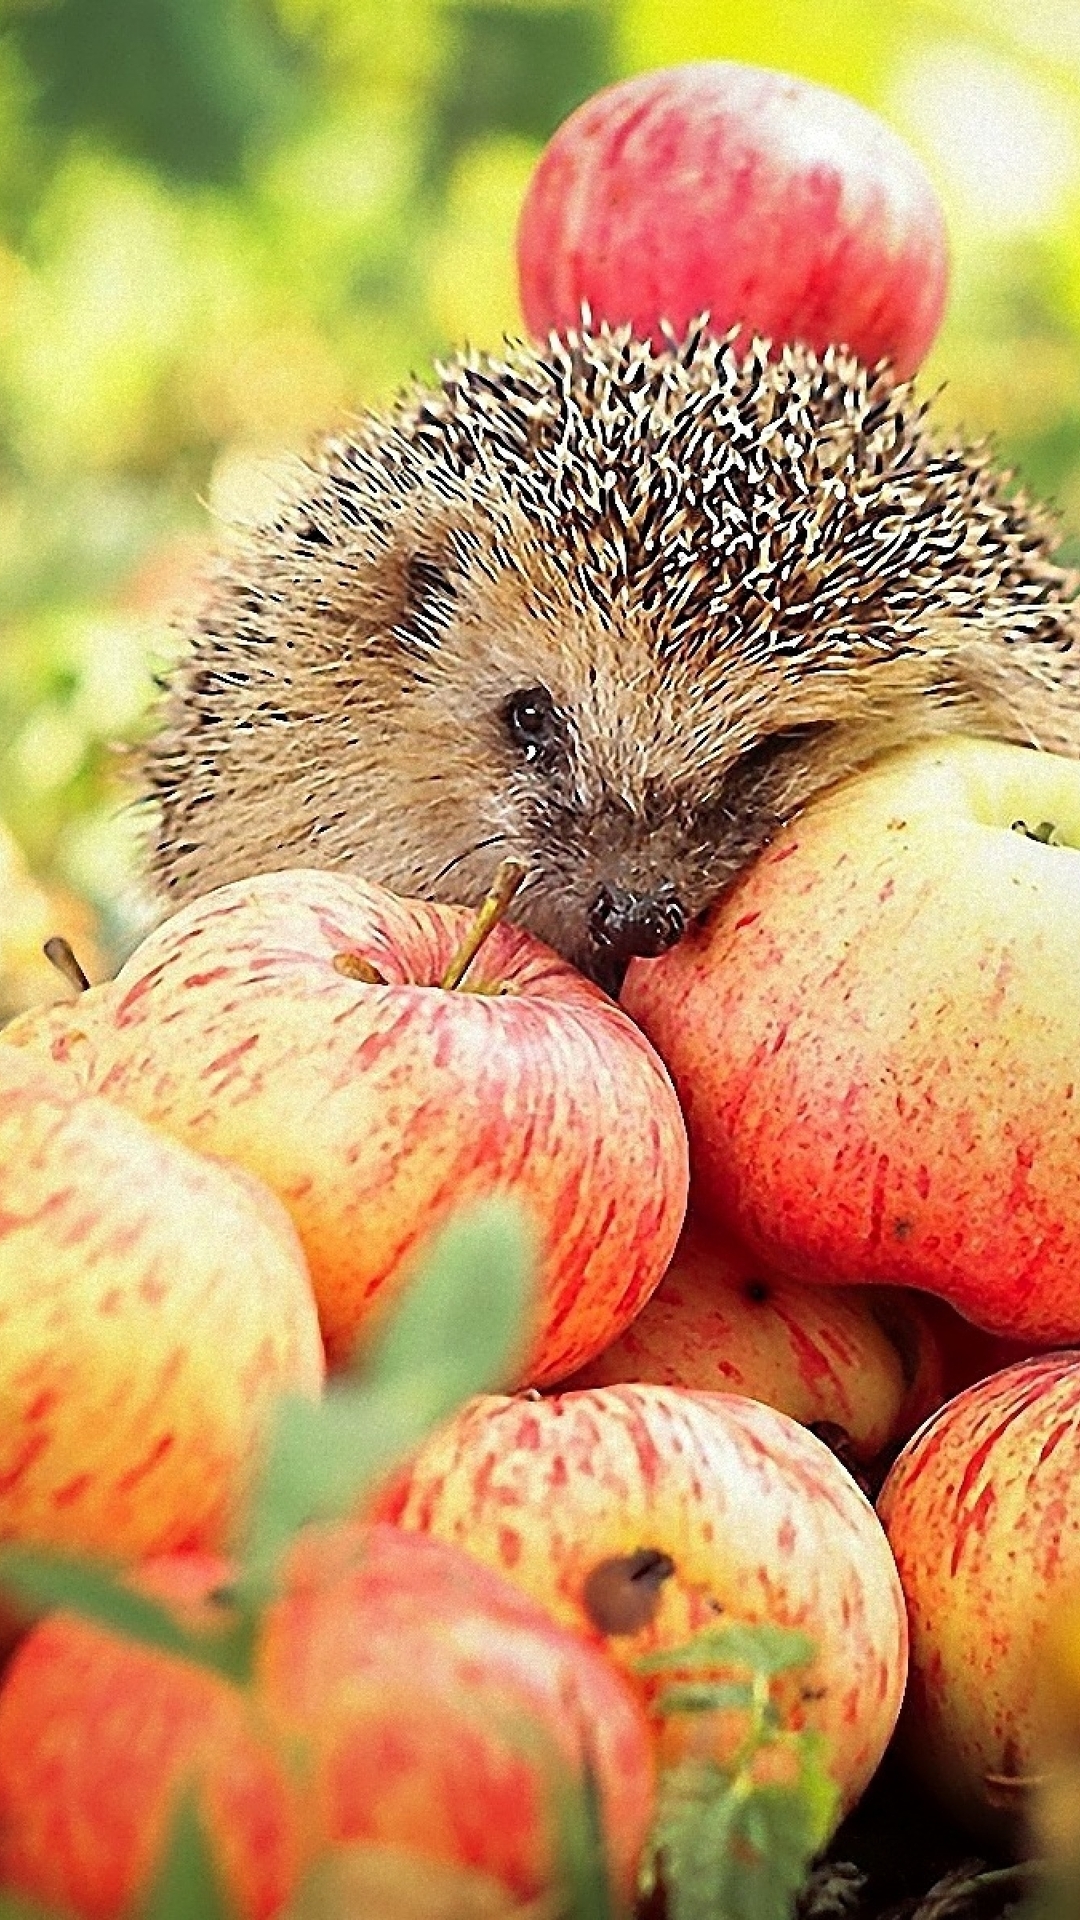 Image: Hedgehog, eyes, needles, muzzle, apples, harvest, leaves